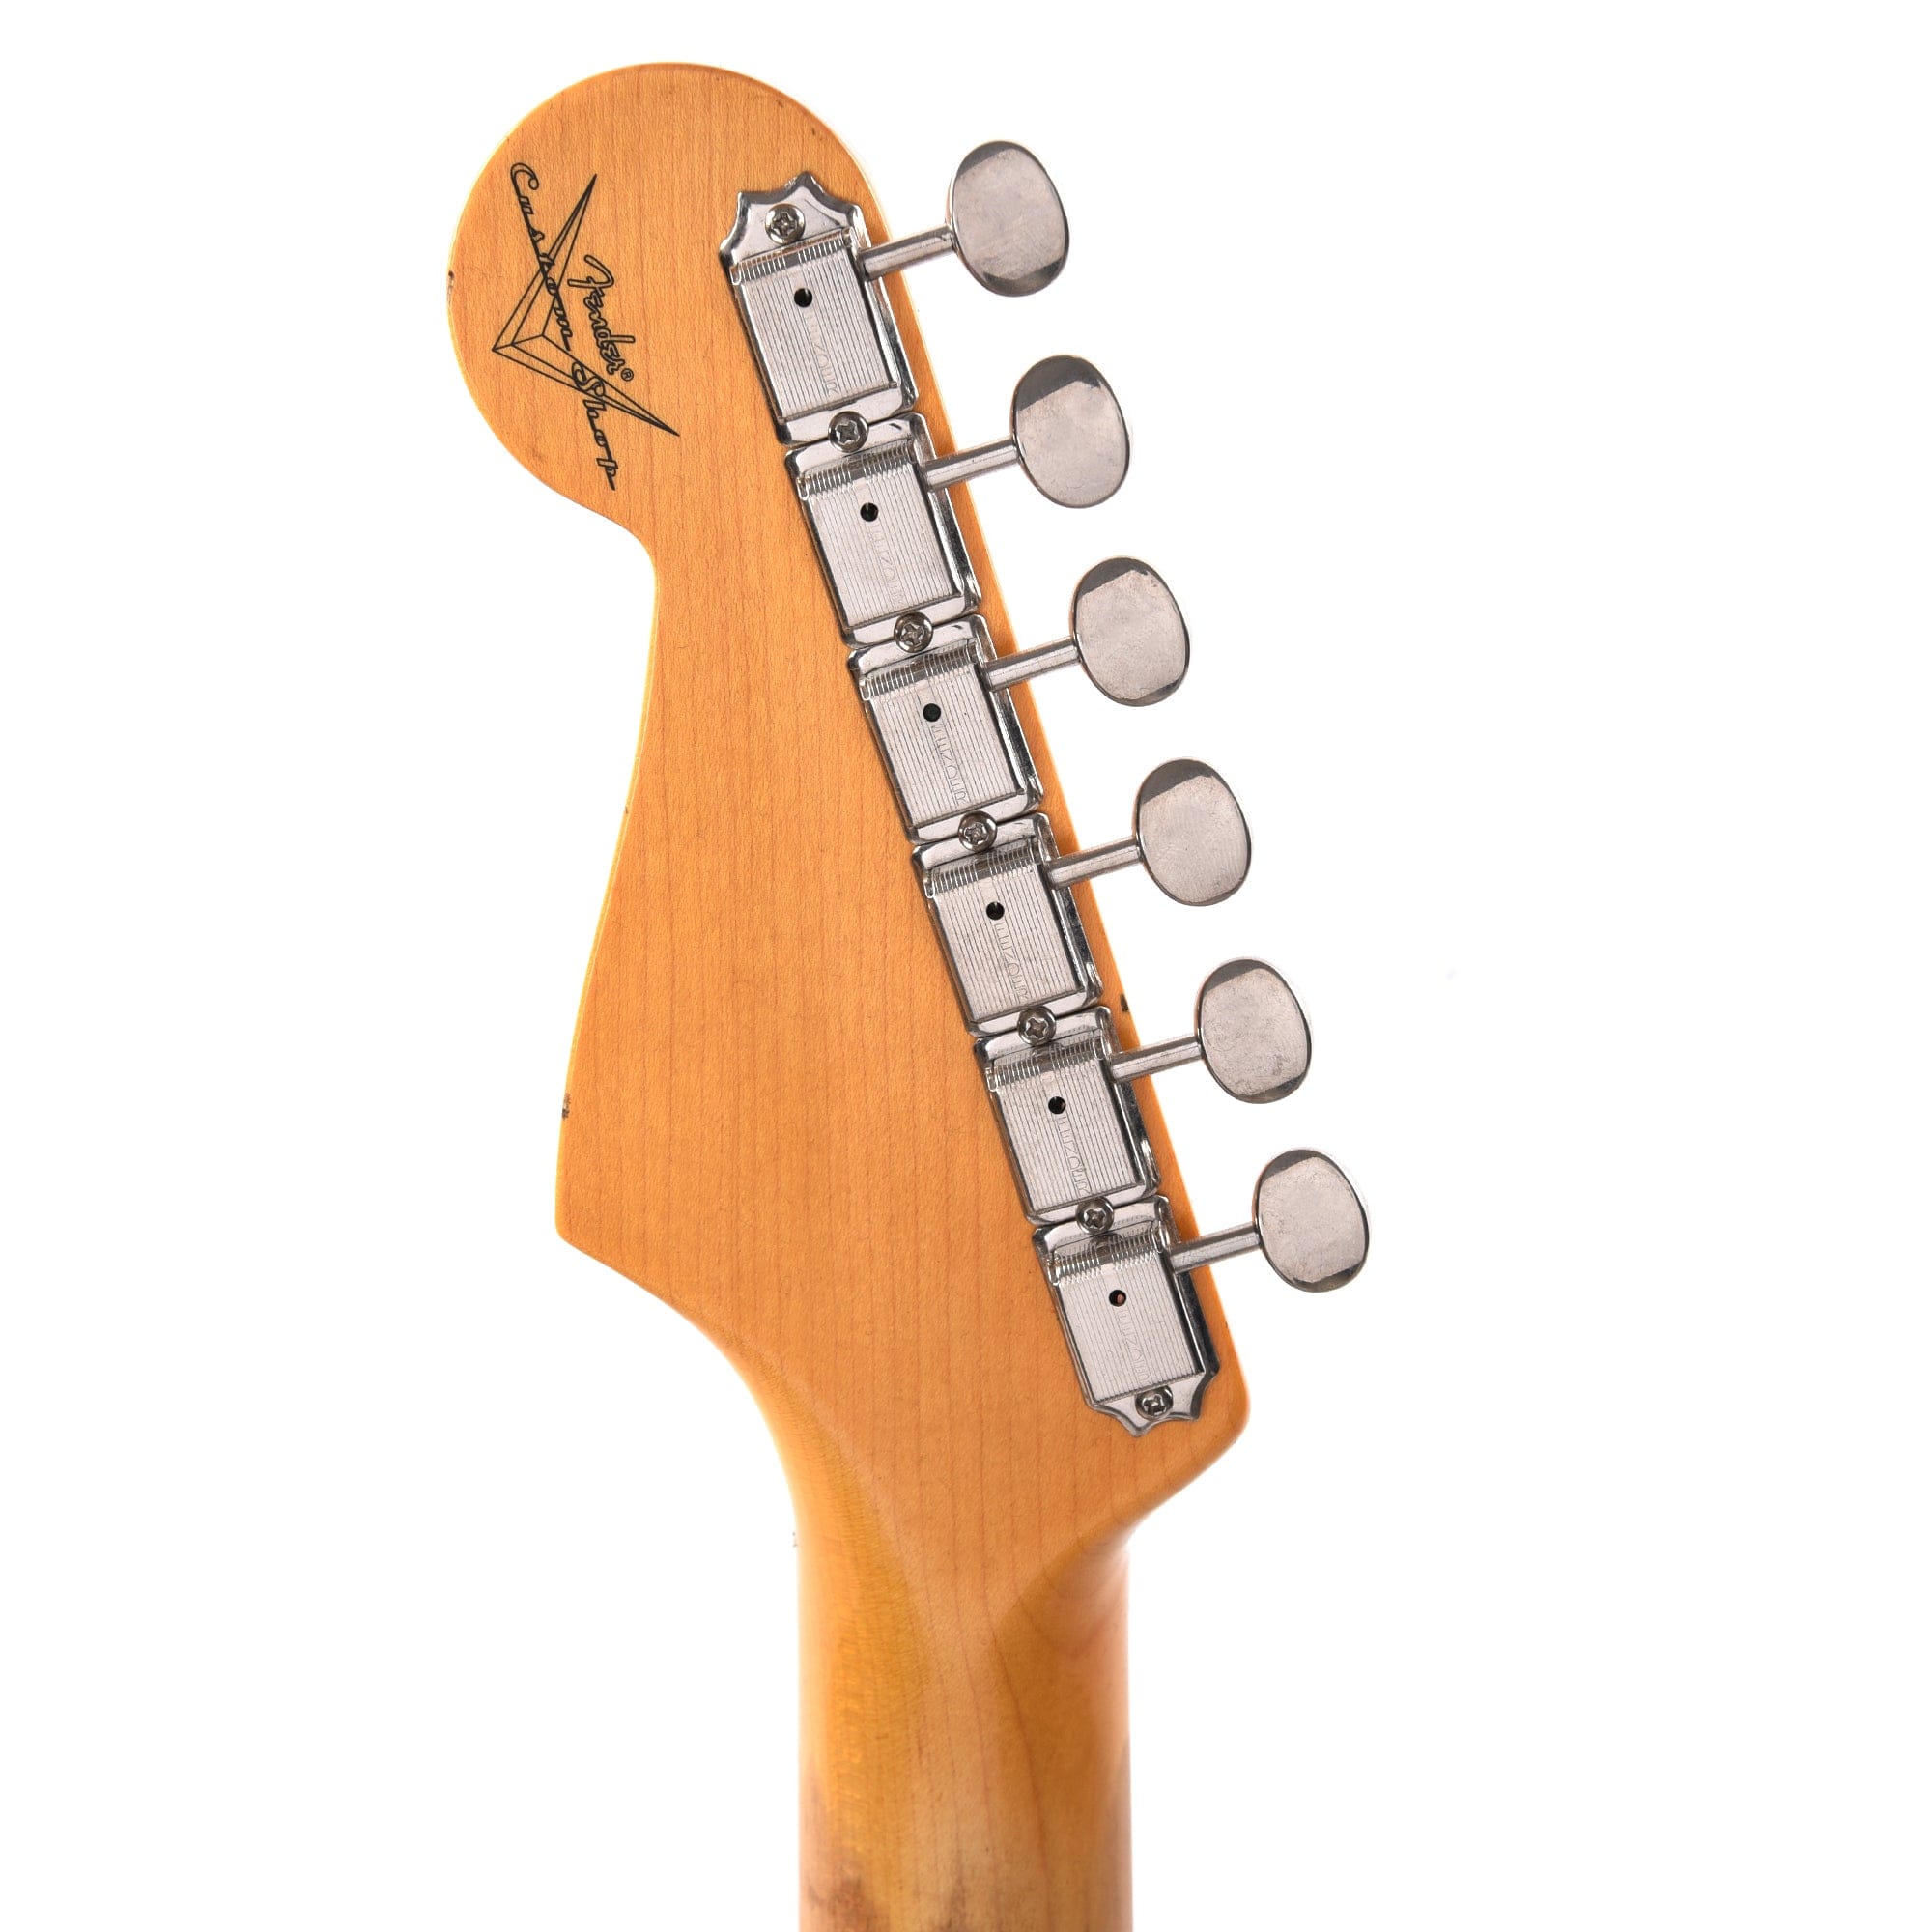 Fender Custom Shop 1955 Ash Stratocaster 